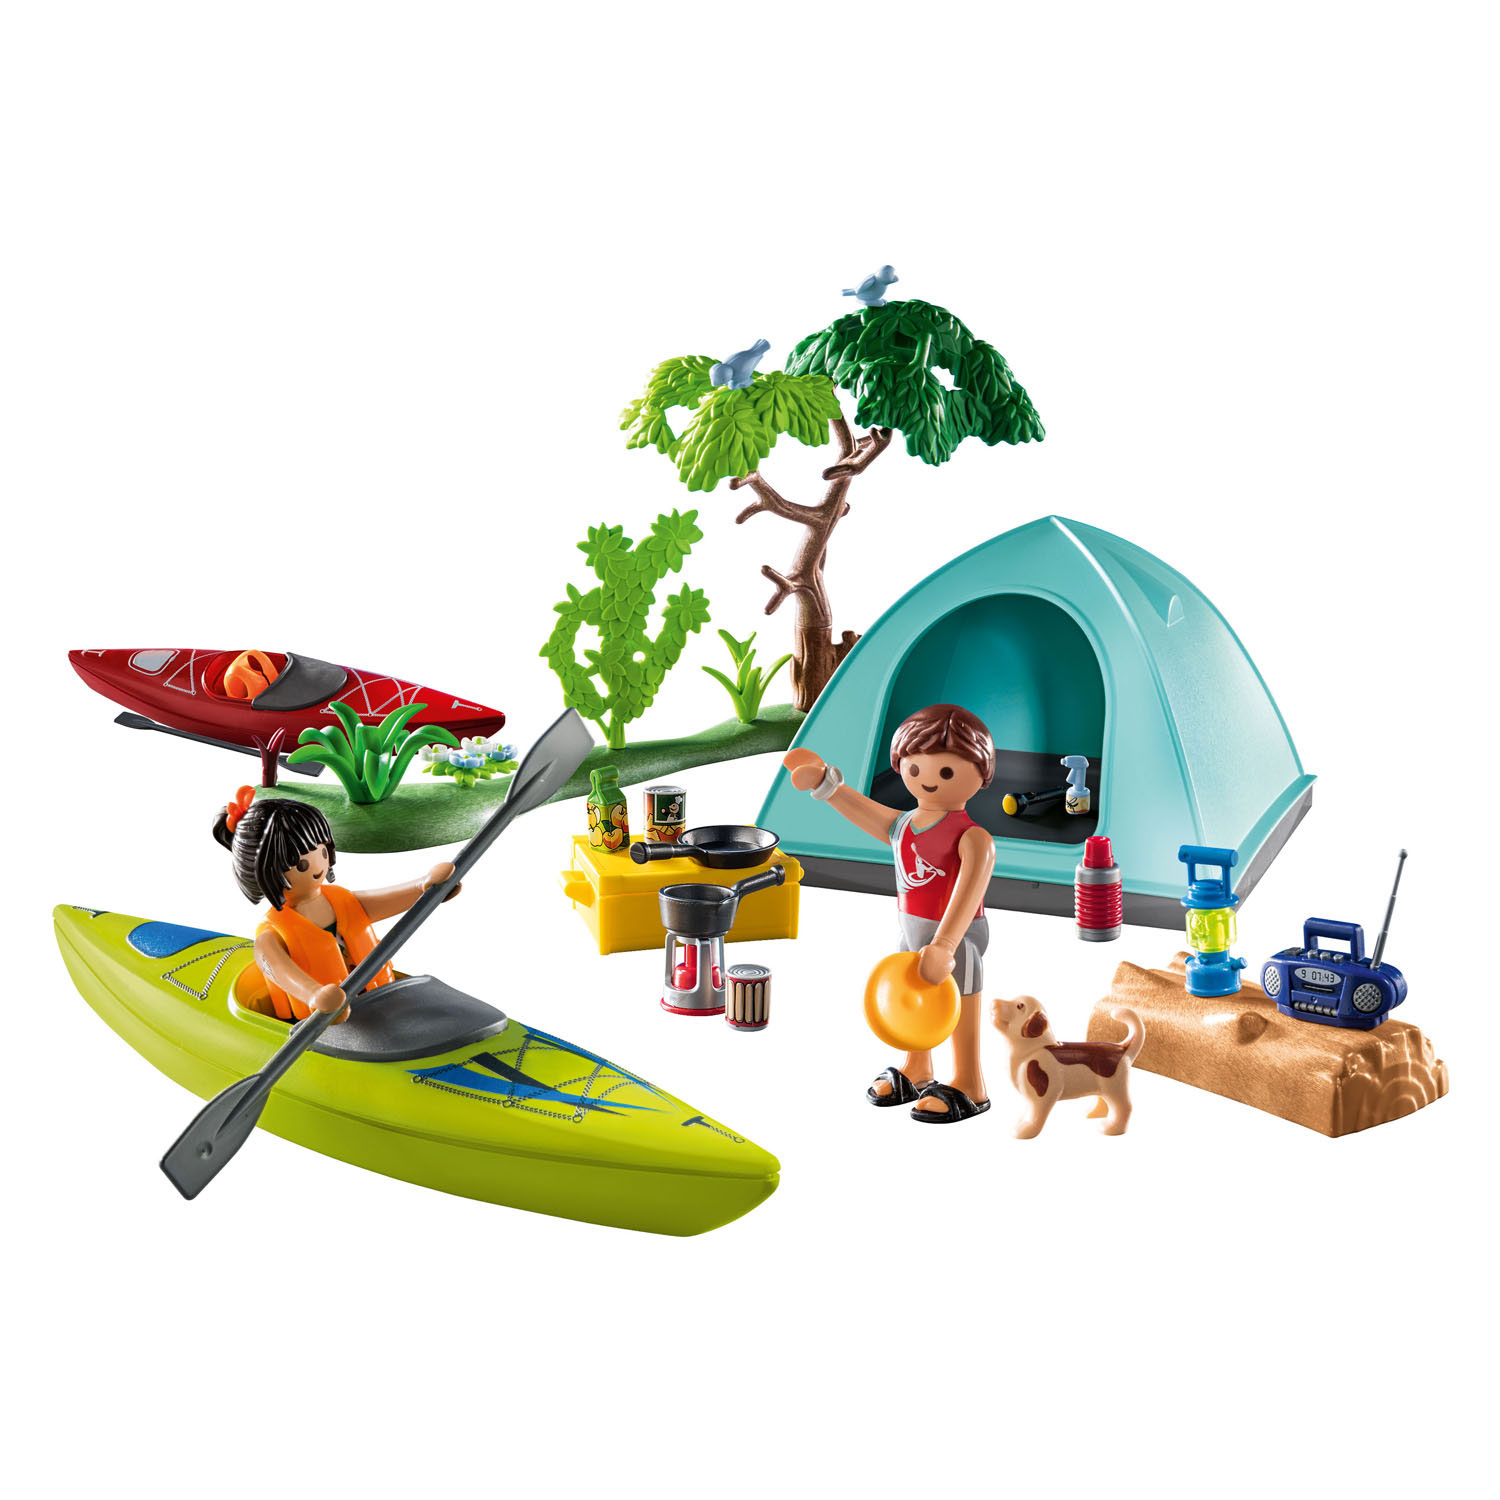 Acheter Playmobil Camping en plein air pour samuser en